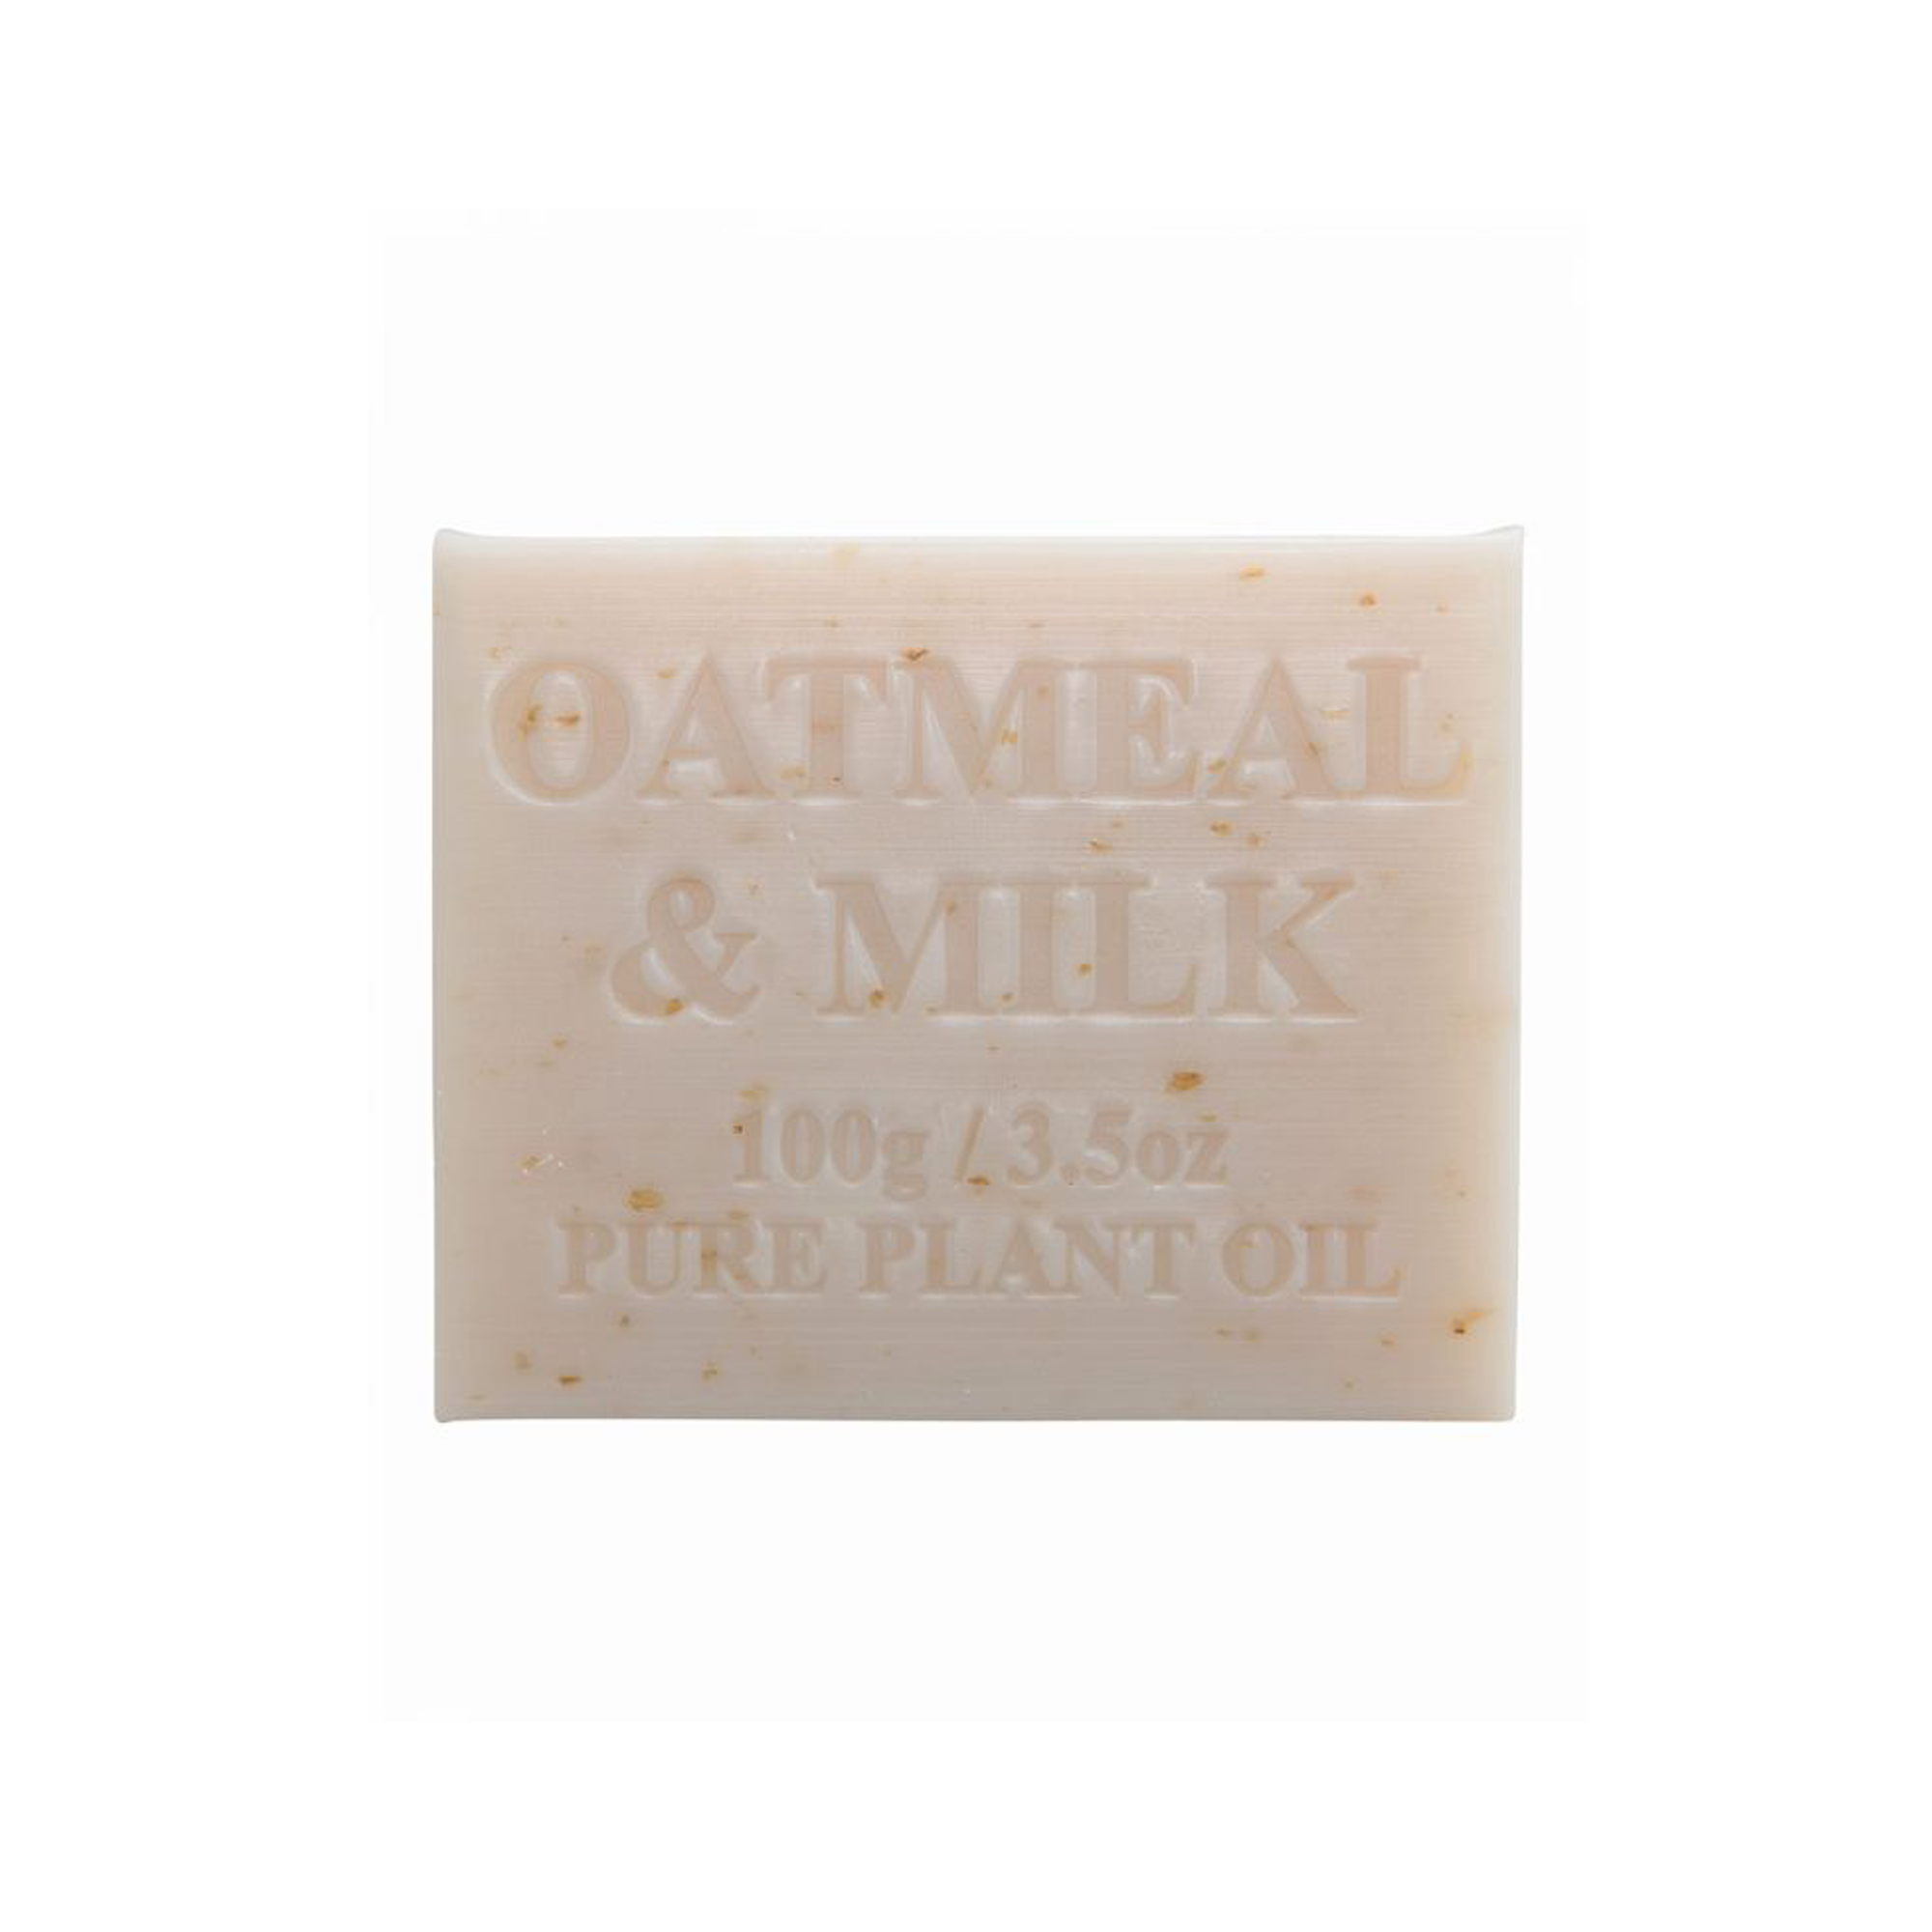 Oatmeal and Milk 100g